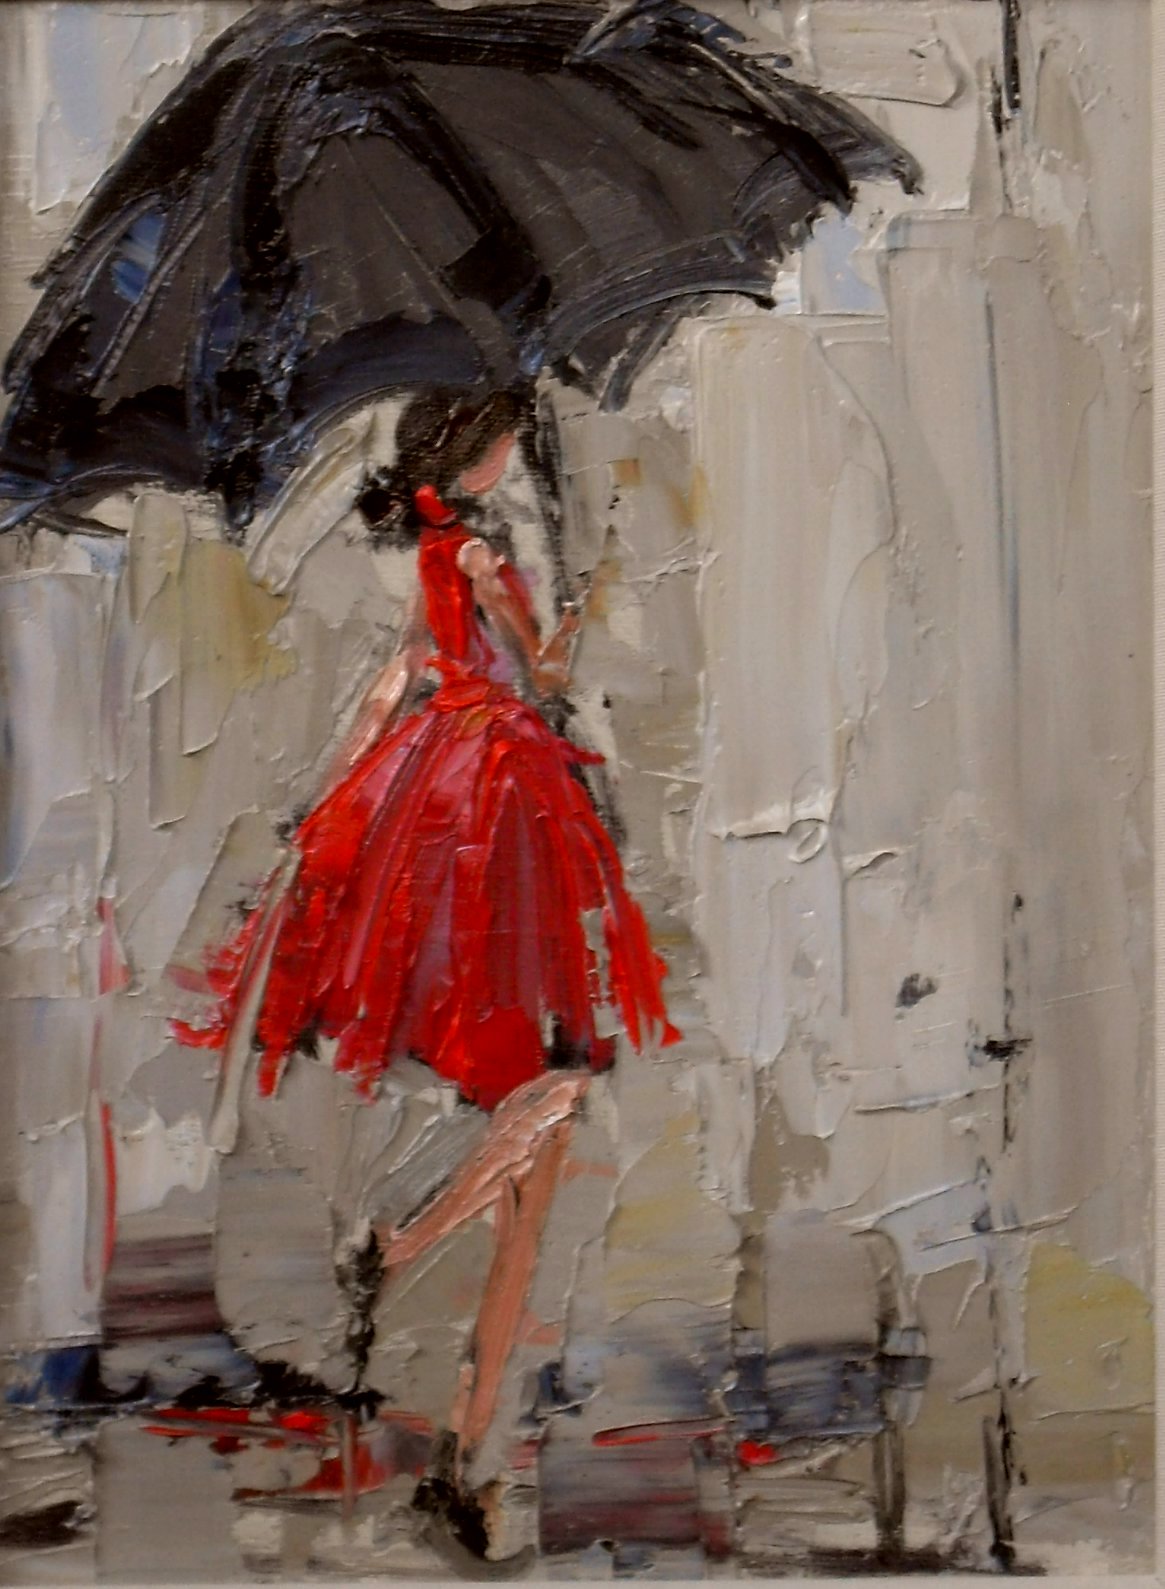 http://1.bp.blogspot.com/_PYu5e6_b_9o/THPpX5IAiTI/AAAAAAAAAmg/-wDUFqPitxU/s1600/dancing+in+the+rain+2.new.JPG